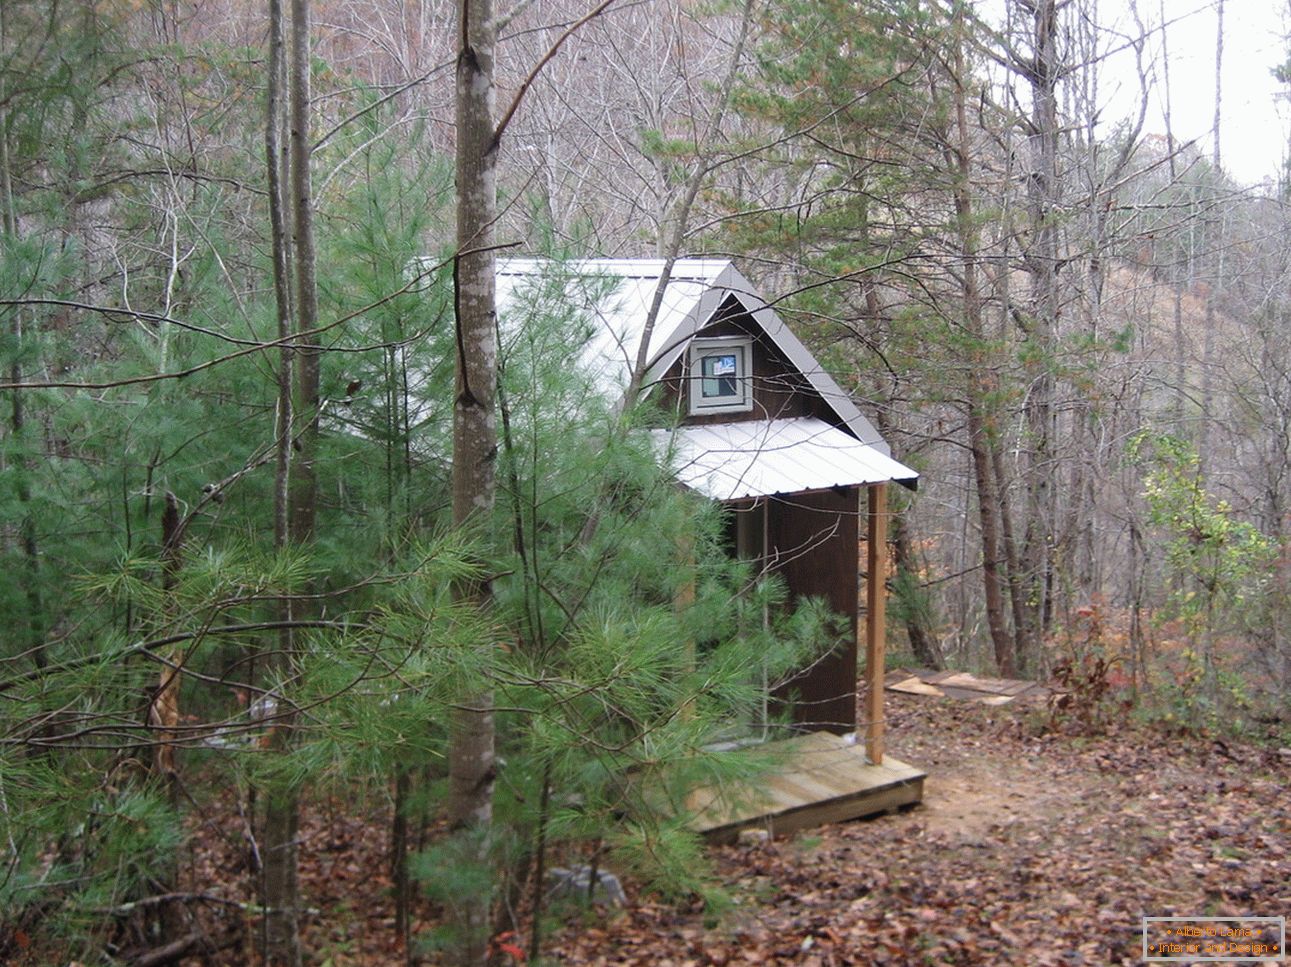 Mala hiša v gozdu